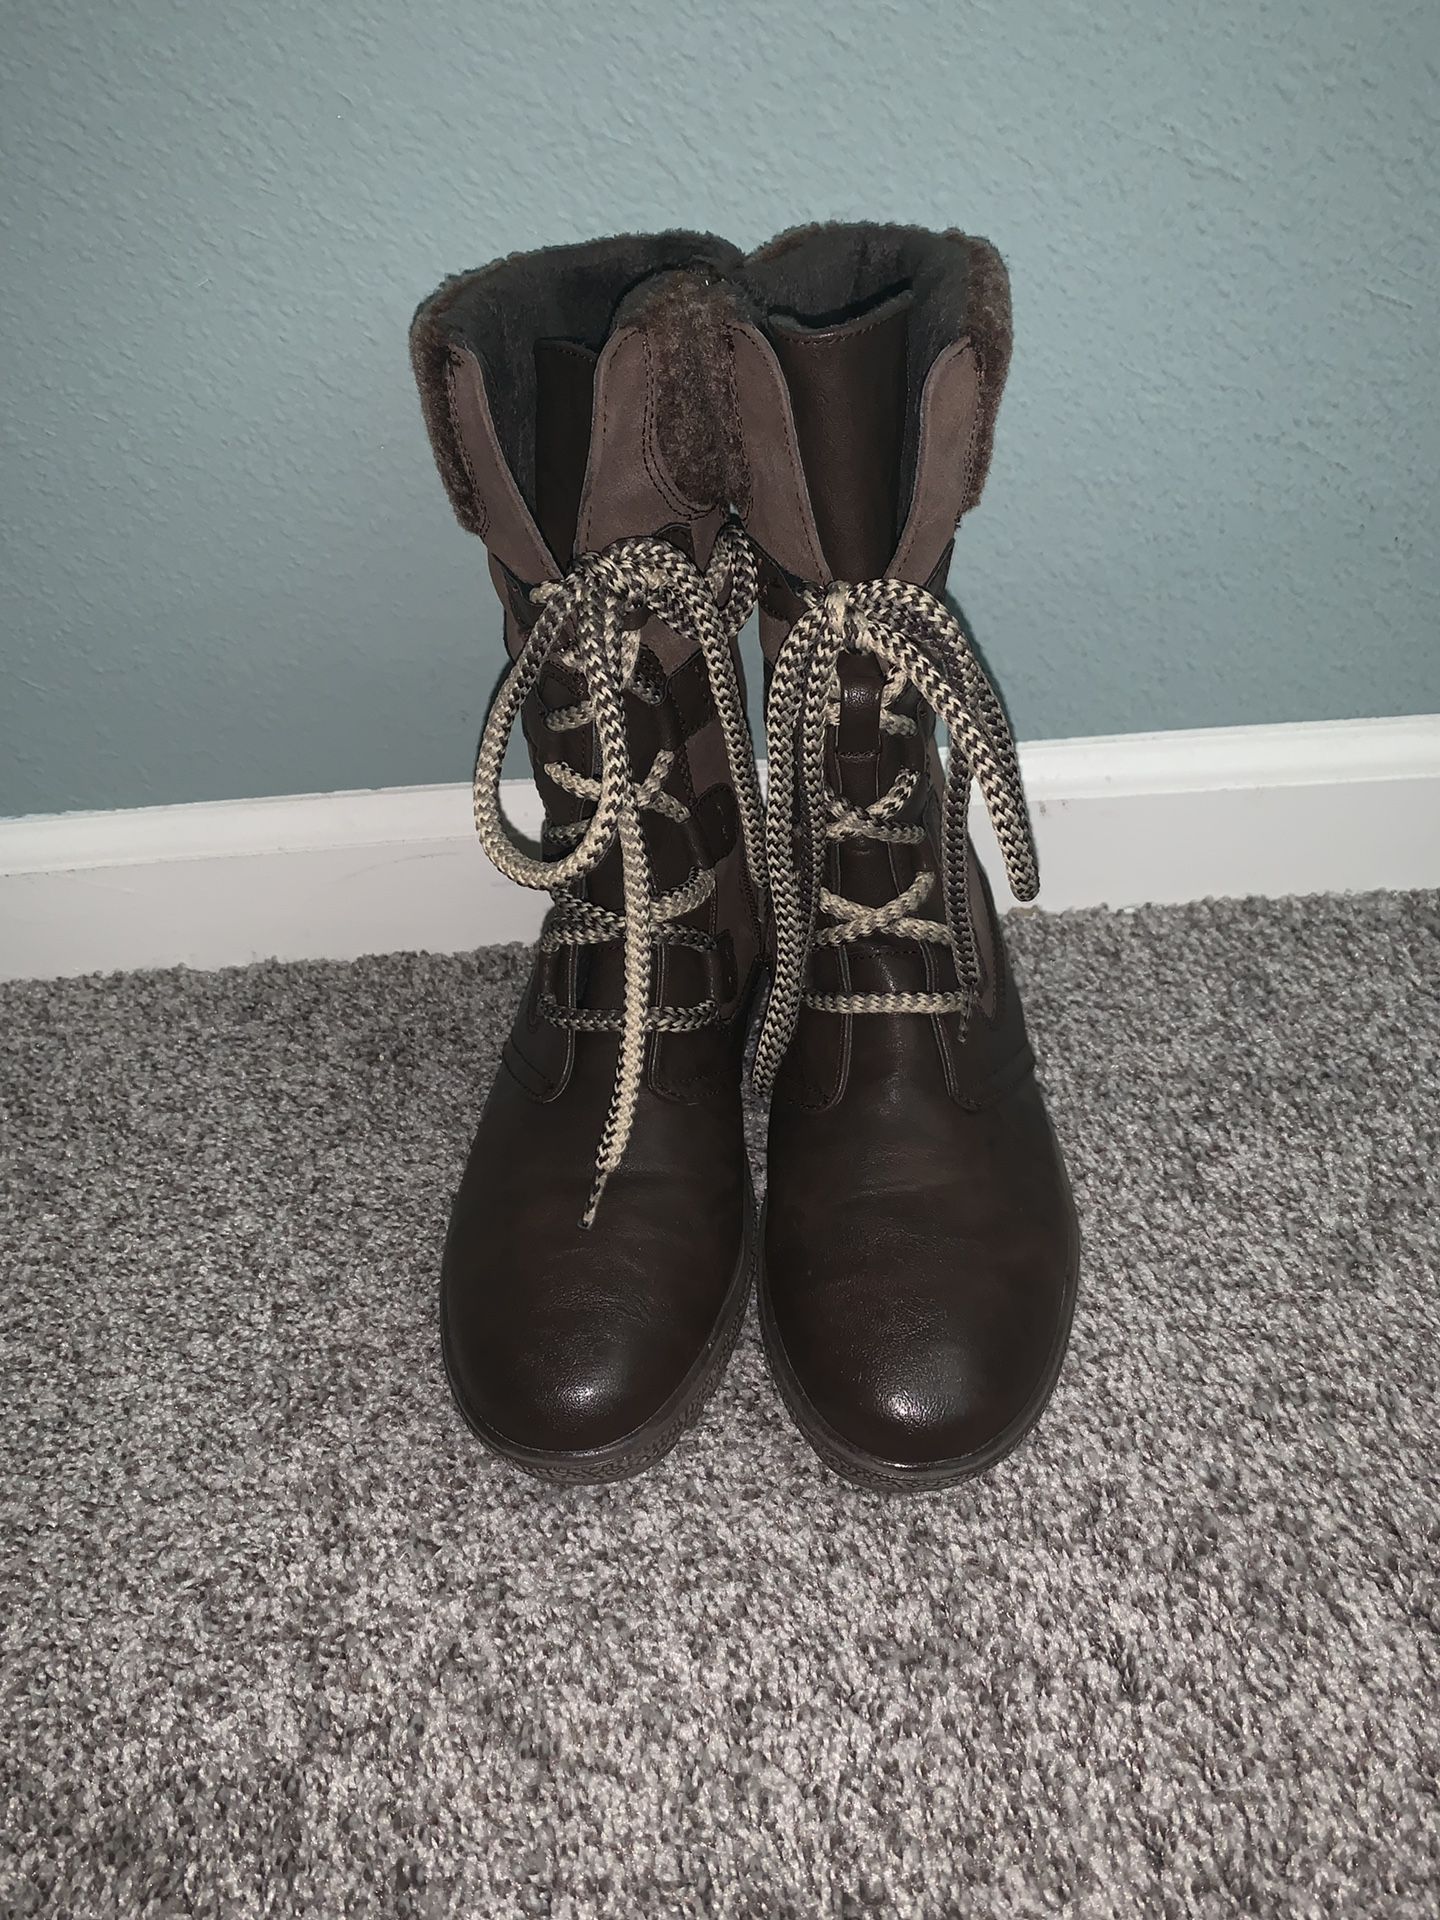 Like New Patrizia brown boots